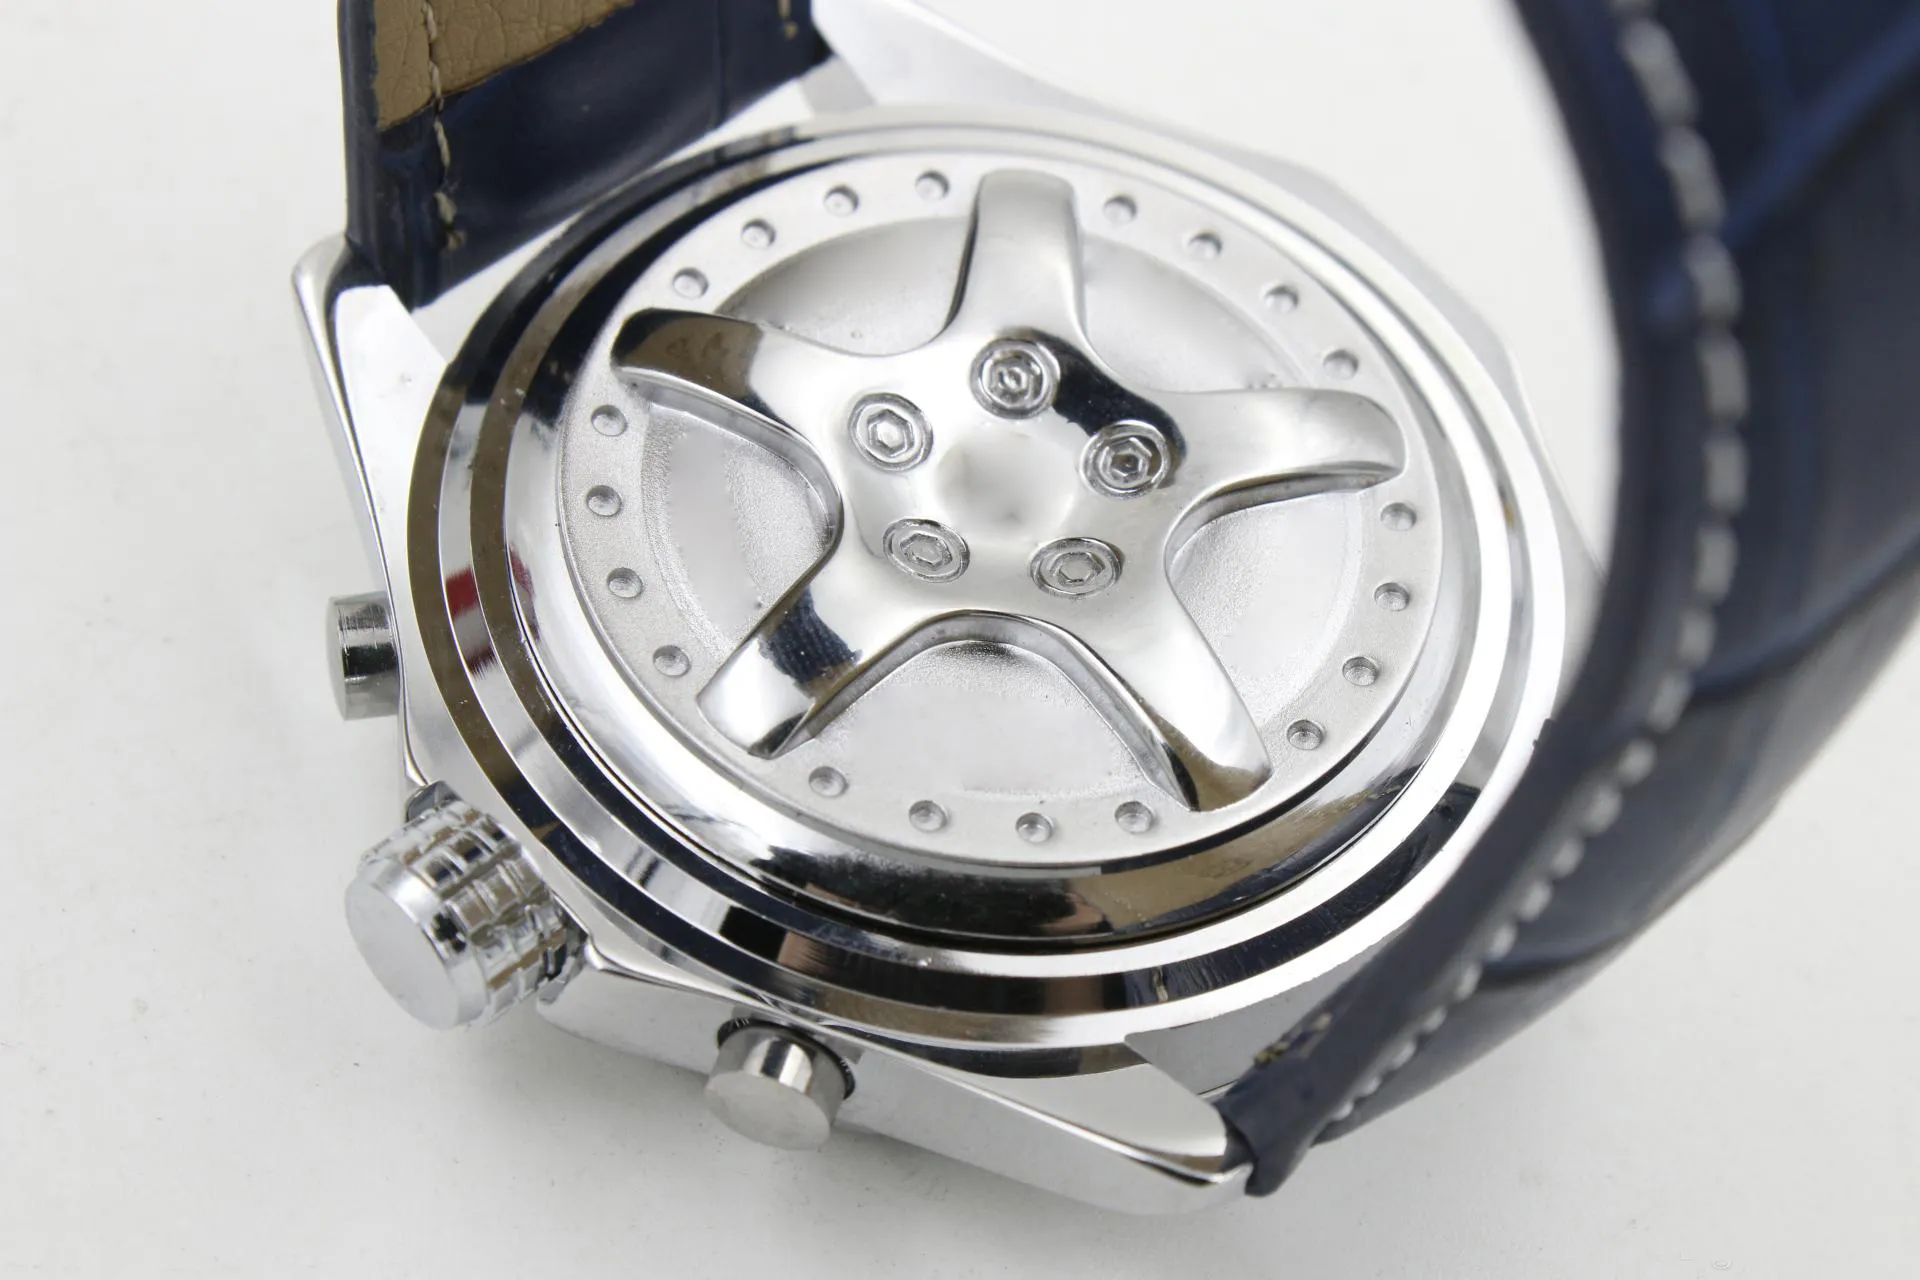 Gute Qualität 1884 Datum automatische mechanische Herrenuhr Leatcher blaues Zifferblatt Armbanduhr Herren Watche Schnalle sechspolig Multi-functio217i